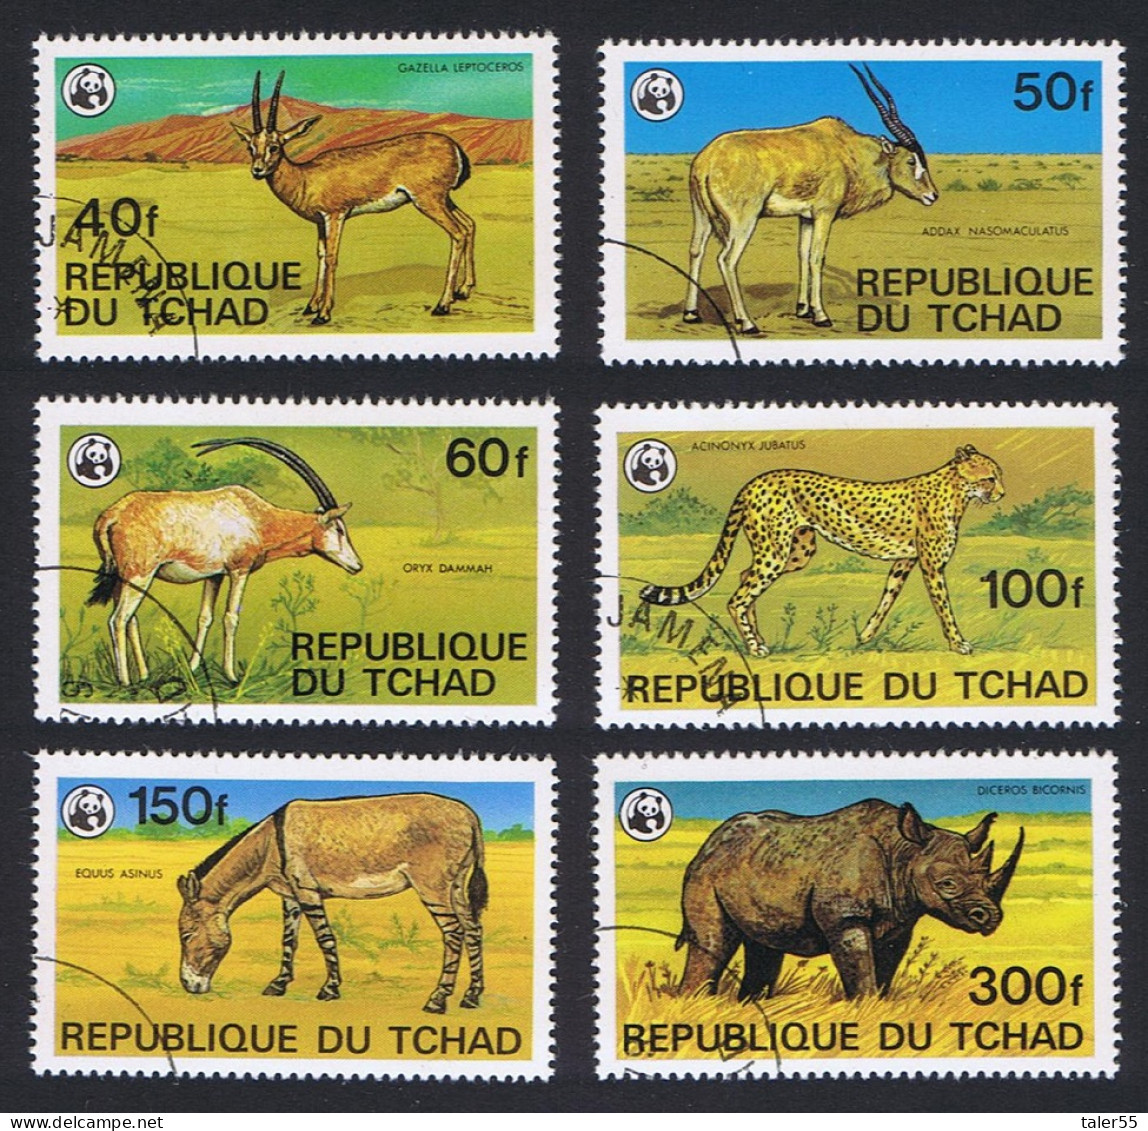 Chad WWF Endangered Animals 6v 1979 CTO SG#555-560 MI#849B-854B Sc#367-372 - Ciad (1960-...)